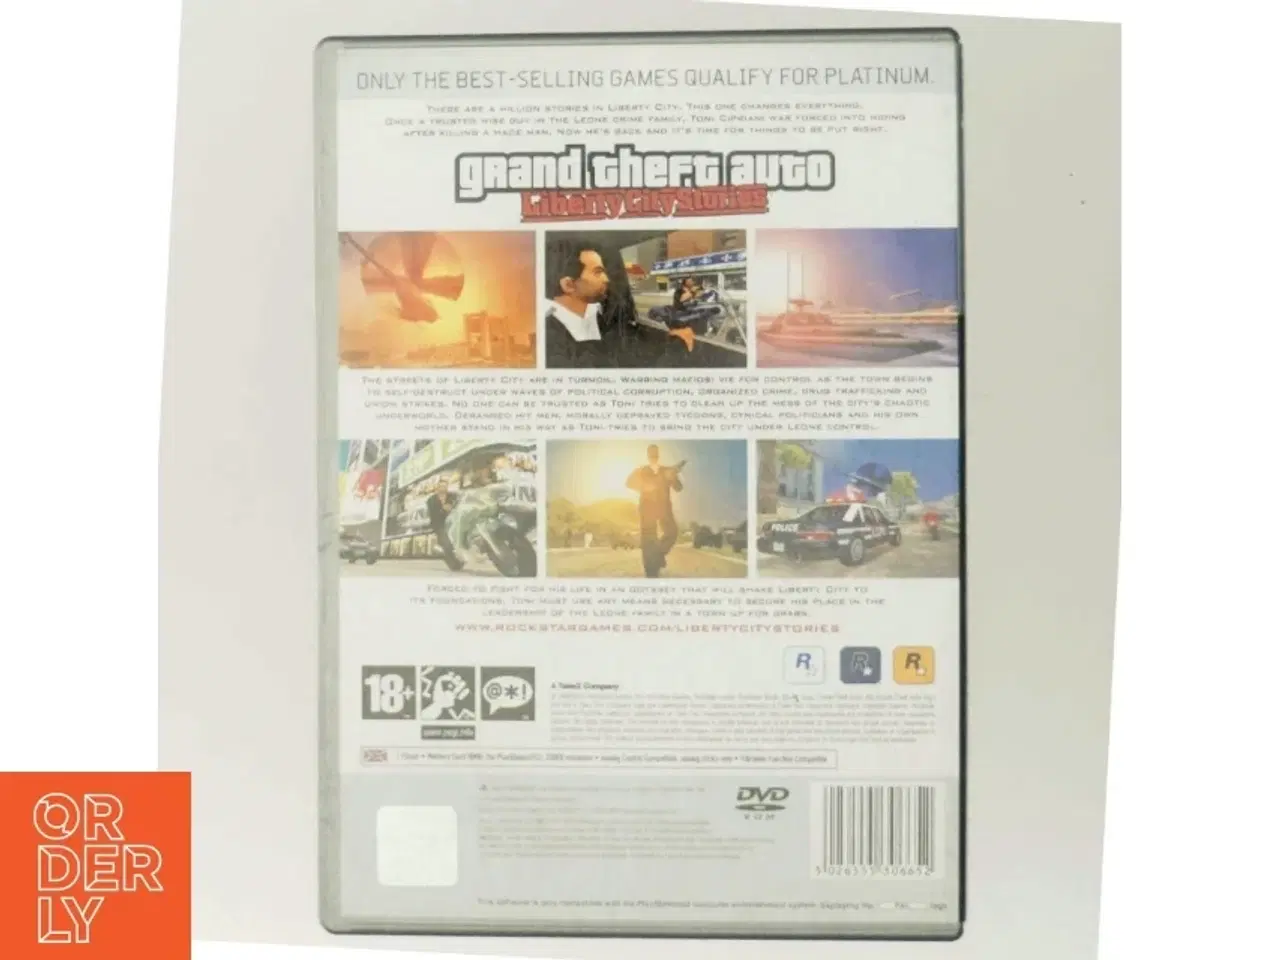 Billede 3 - PS2 spil Grand Theft Auto: Liberty City Stories fra Rockstar Games